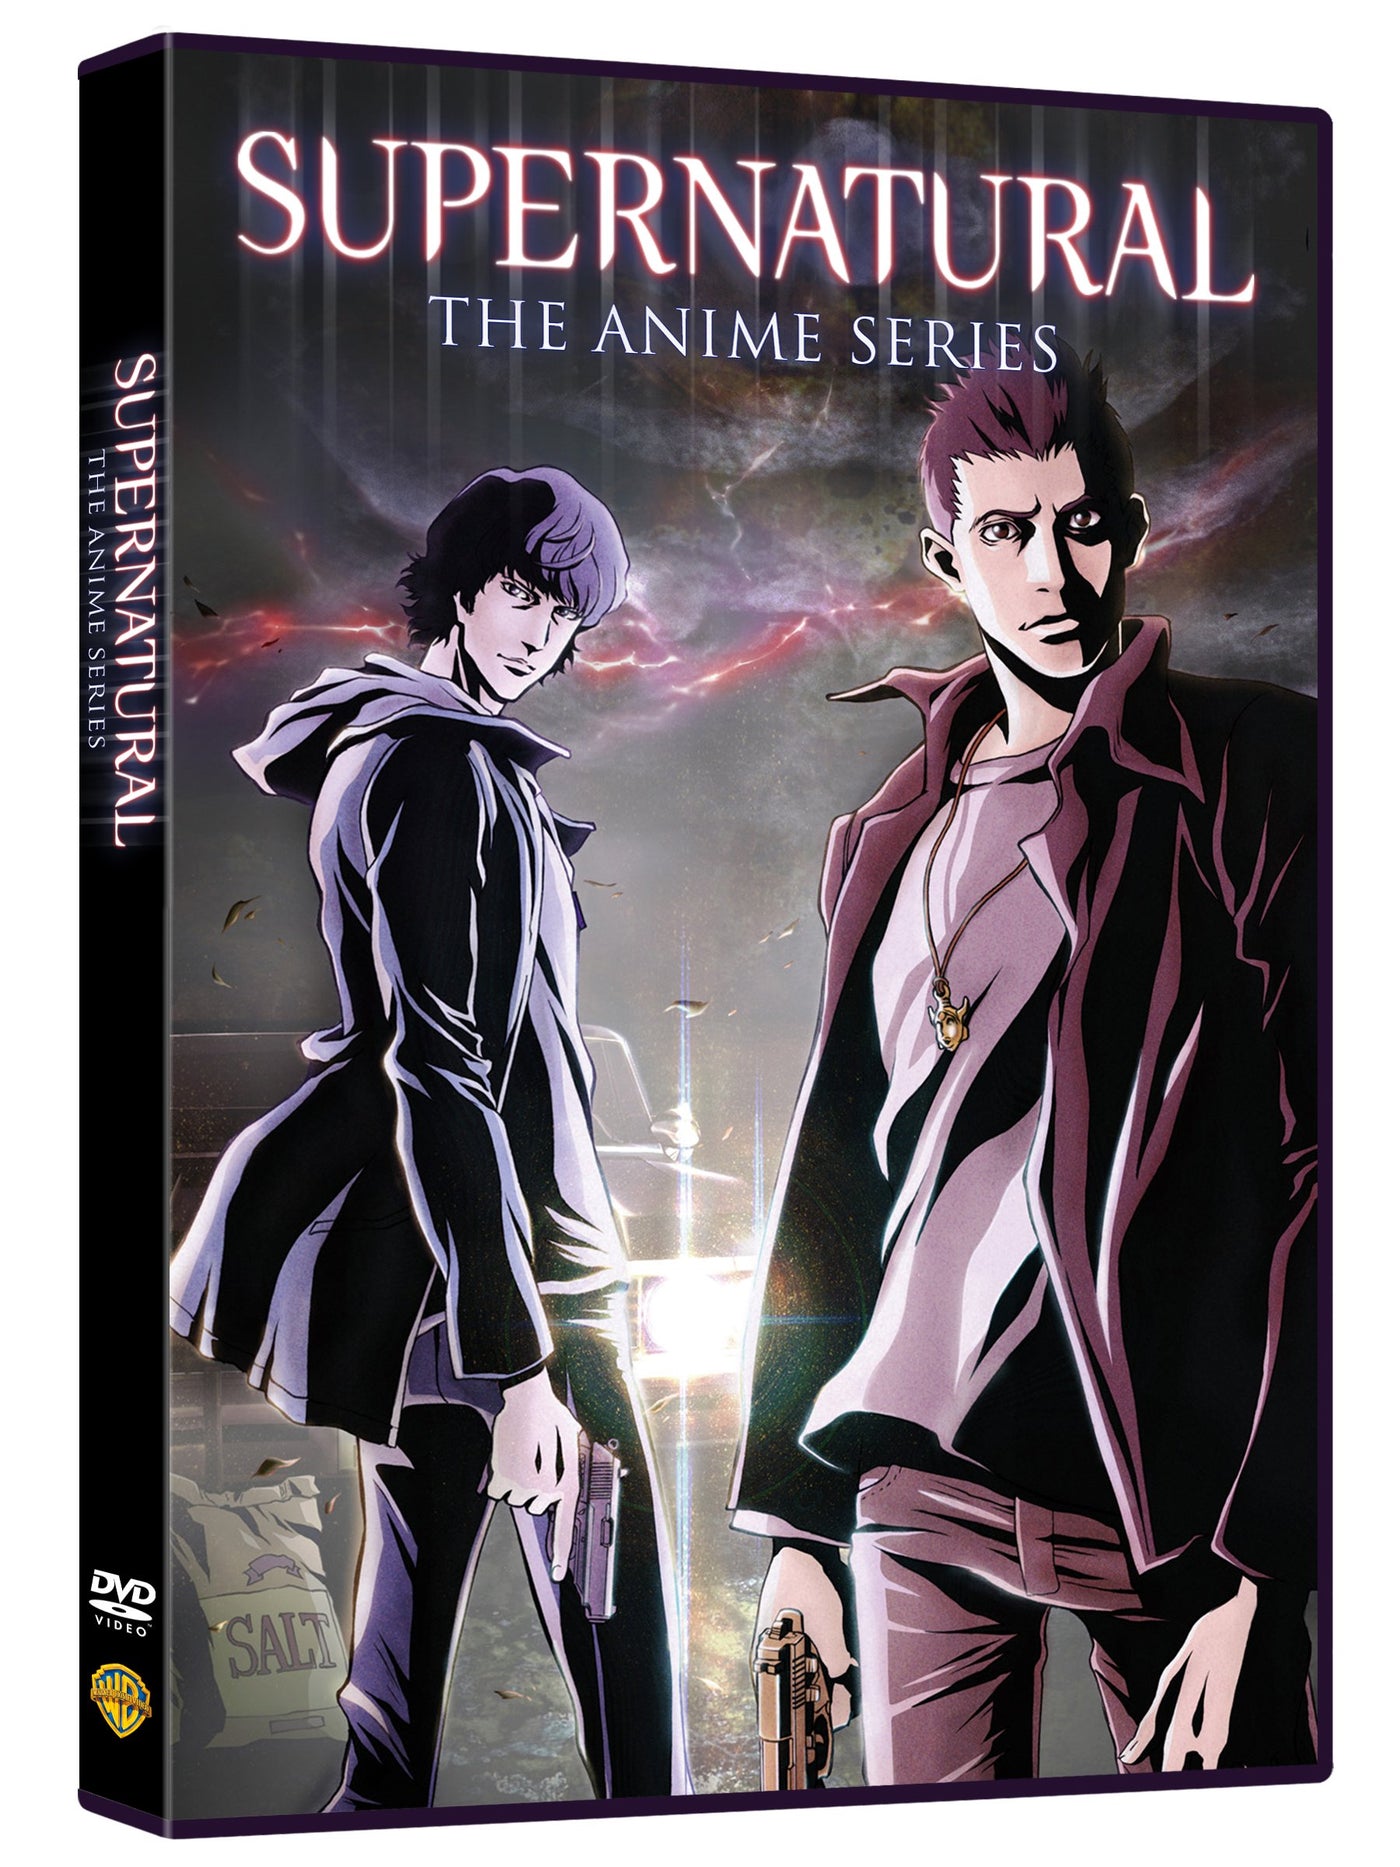 Supernatural: The Anime Series (DVD)